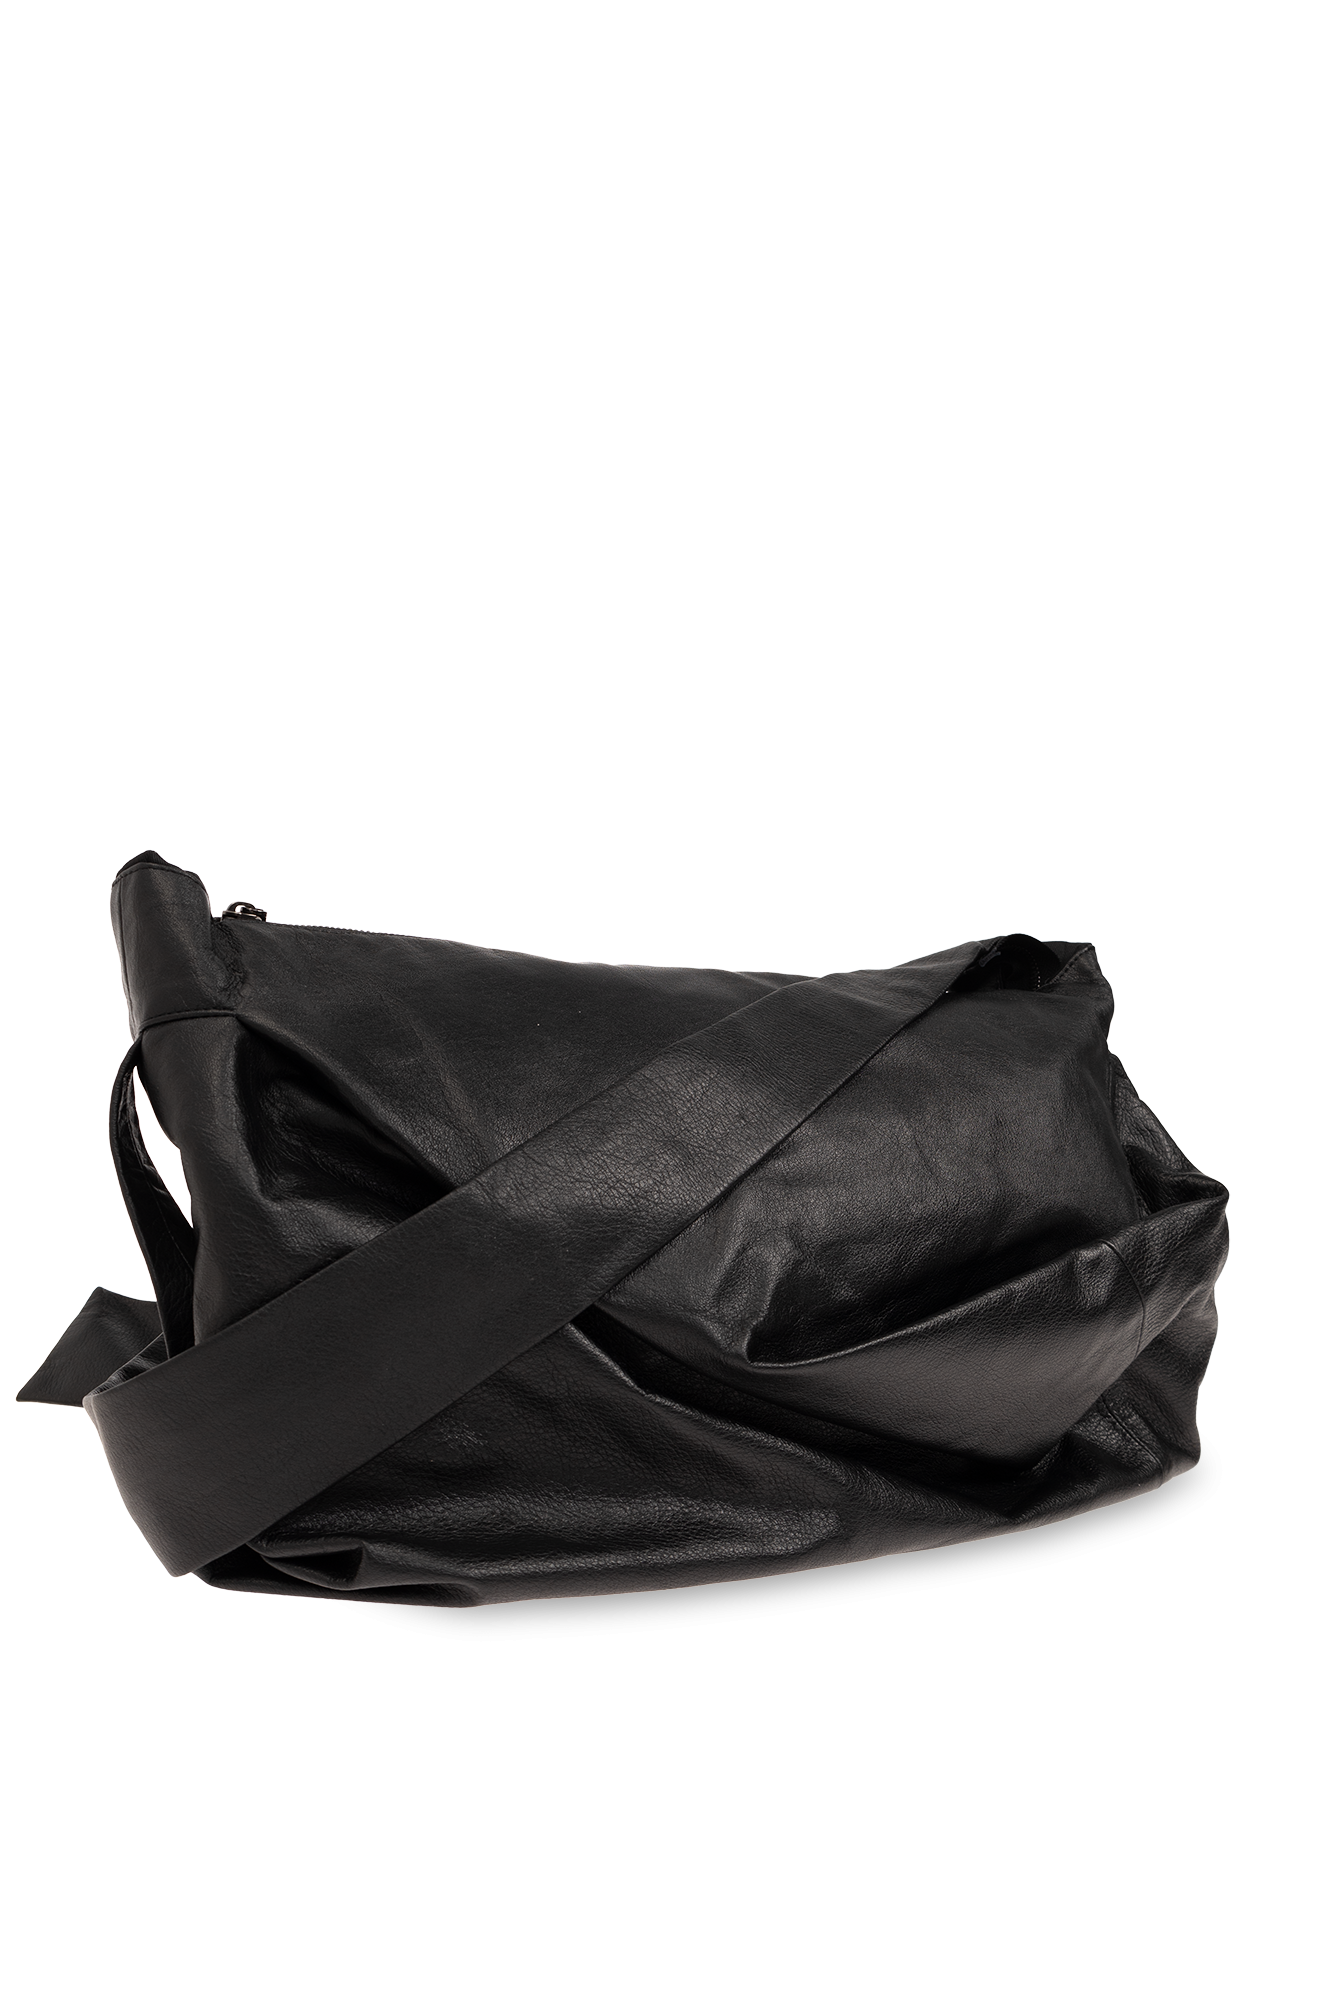 Discord Yohji Yamamoto Draped shoulder bag